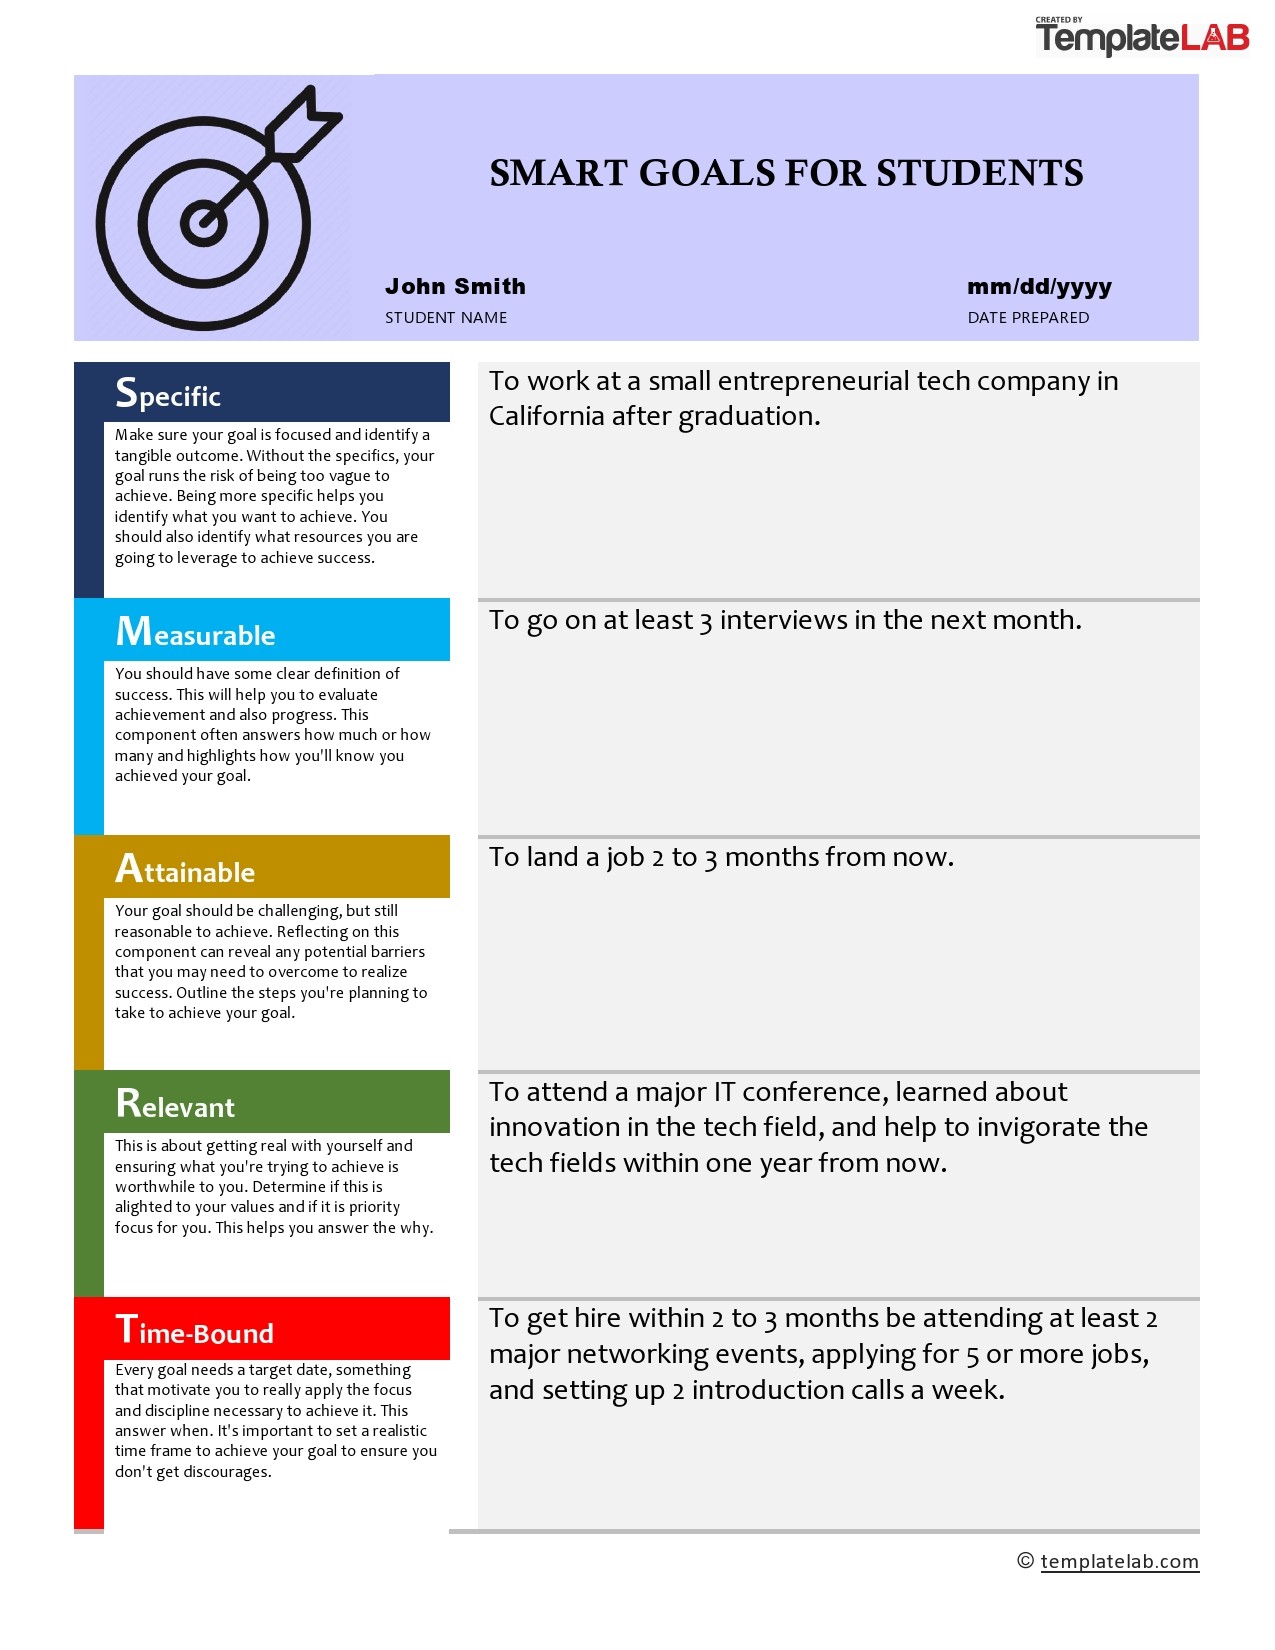 45 SMART Goals Templates, Examples & Worksheets ᐅ TemplateLab